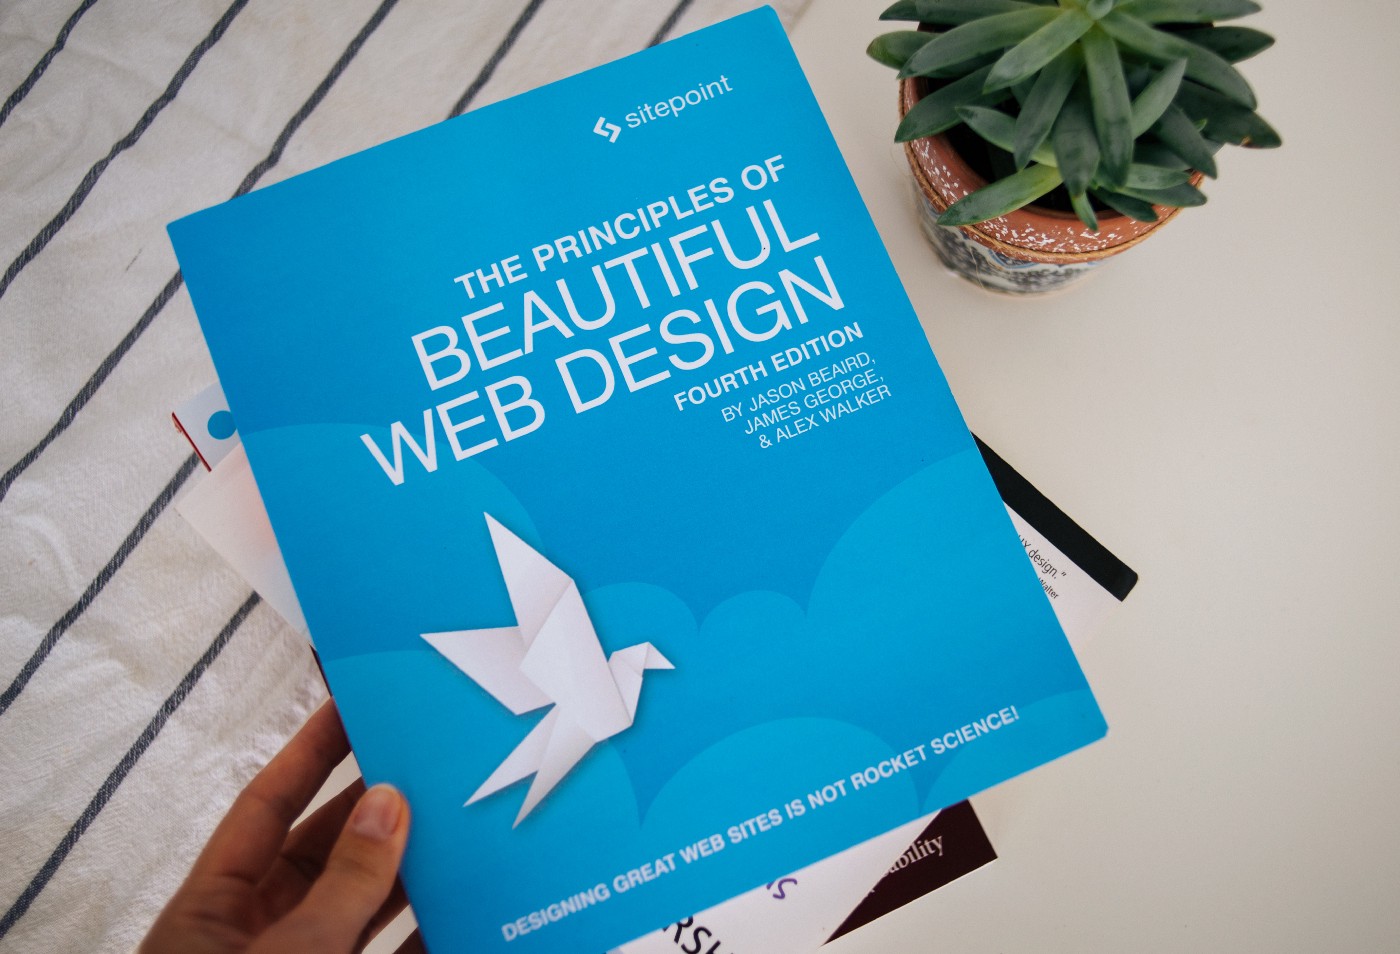 Photo of the book: “The Principles of Beautiful Web Design” by Steve Krug- courtesy of Elena Putina